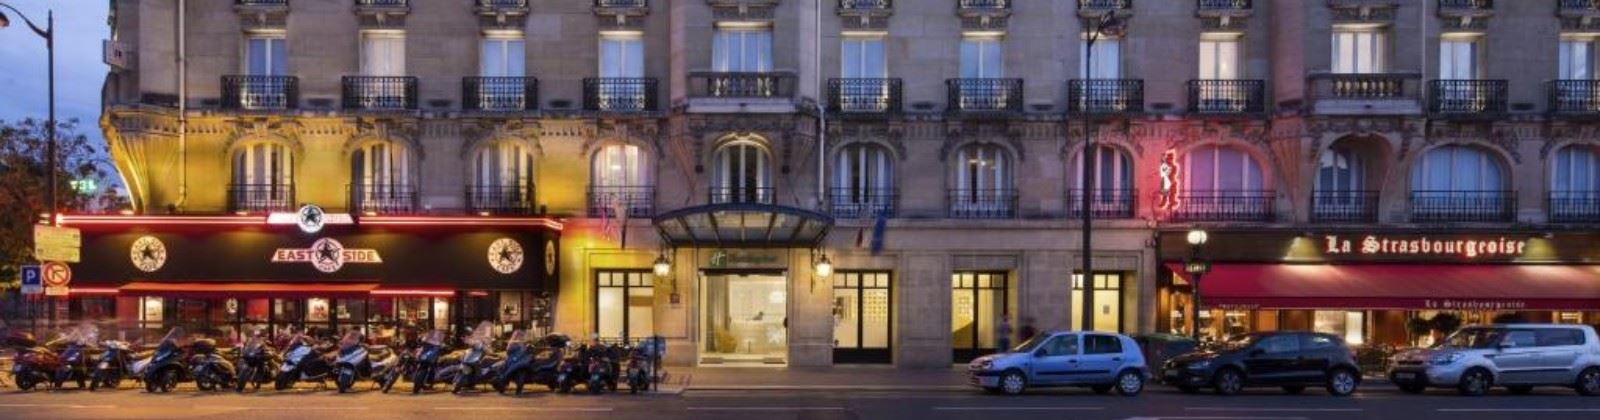 OLEVENE image - holiday-inn-paris-gare-de-l-est-olevene-restaurant-hotel-conference-